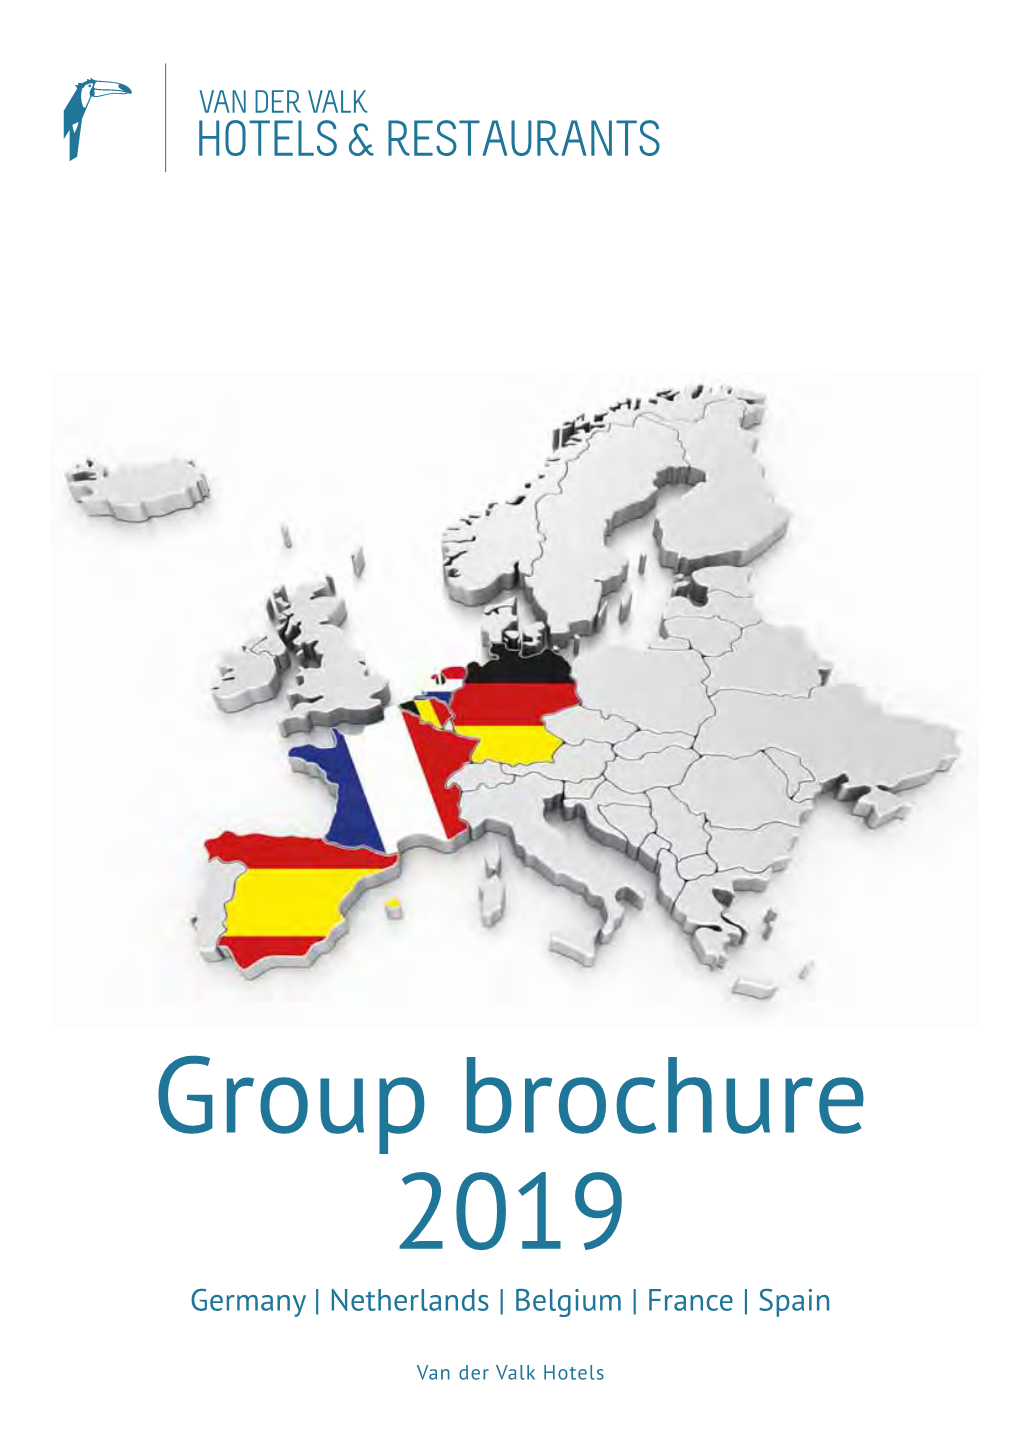 Group Brochure 2019 Germany | Netherlands | Belgium | France | Spain